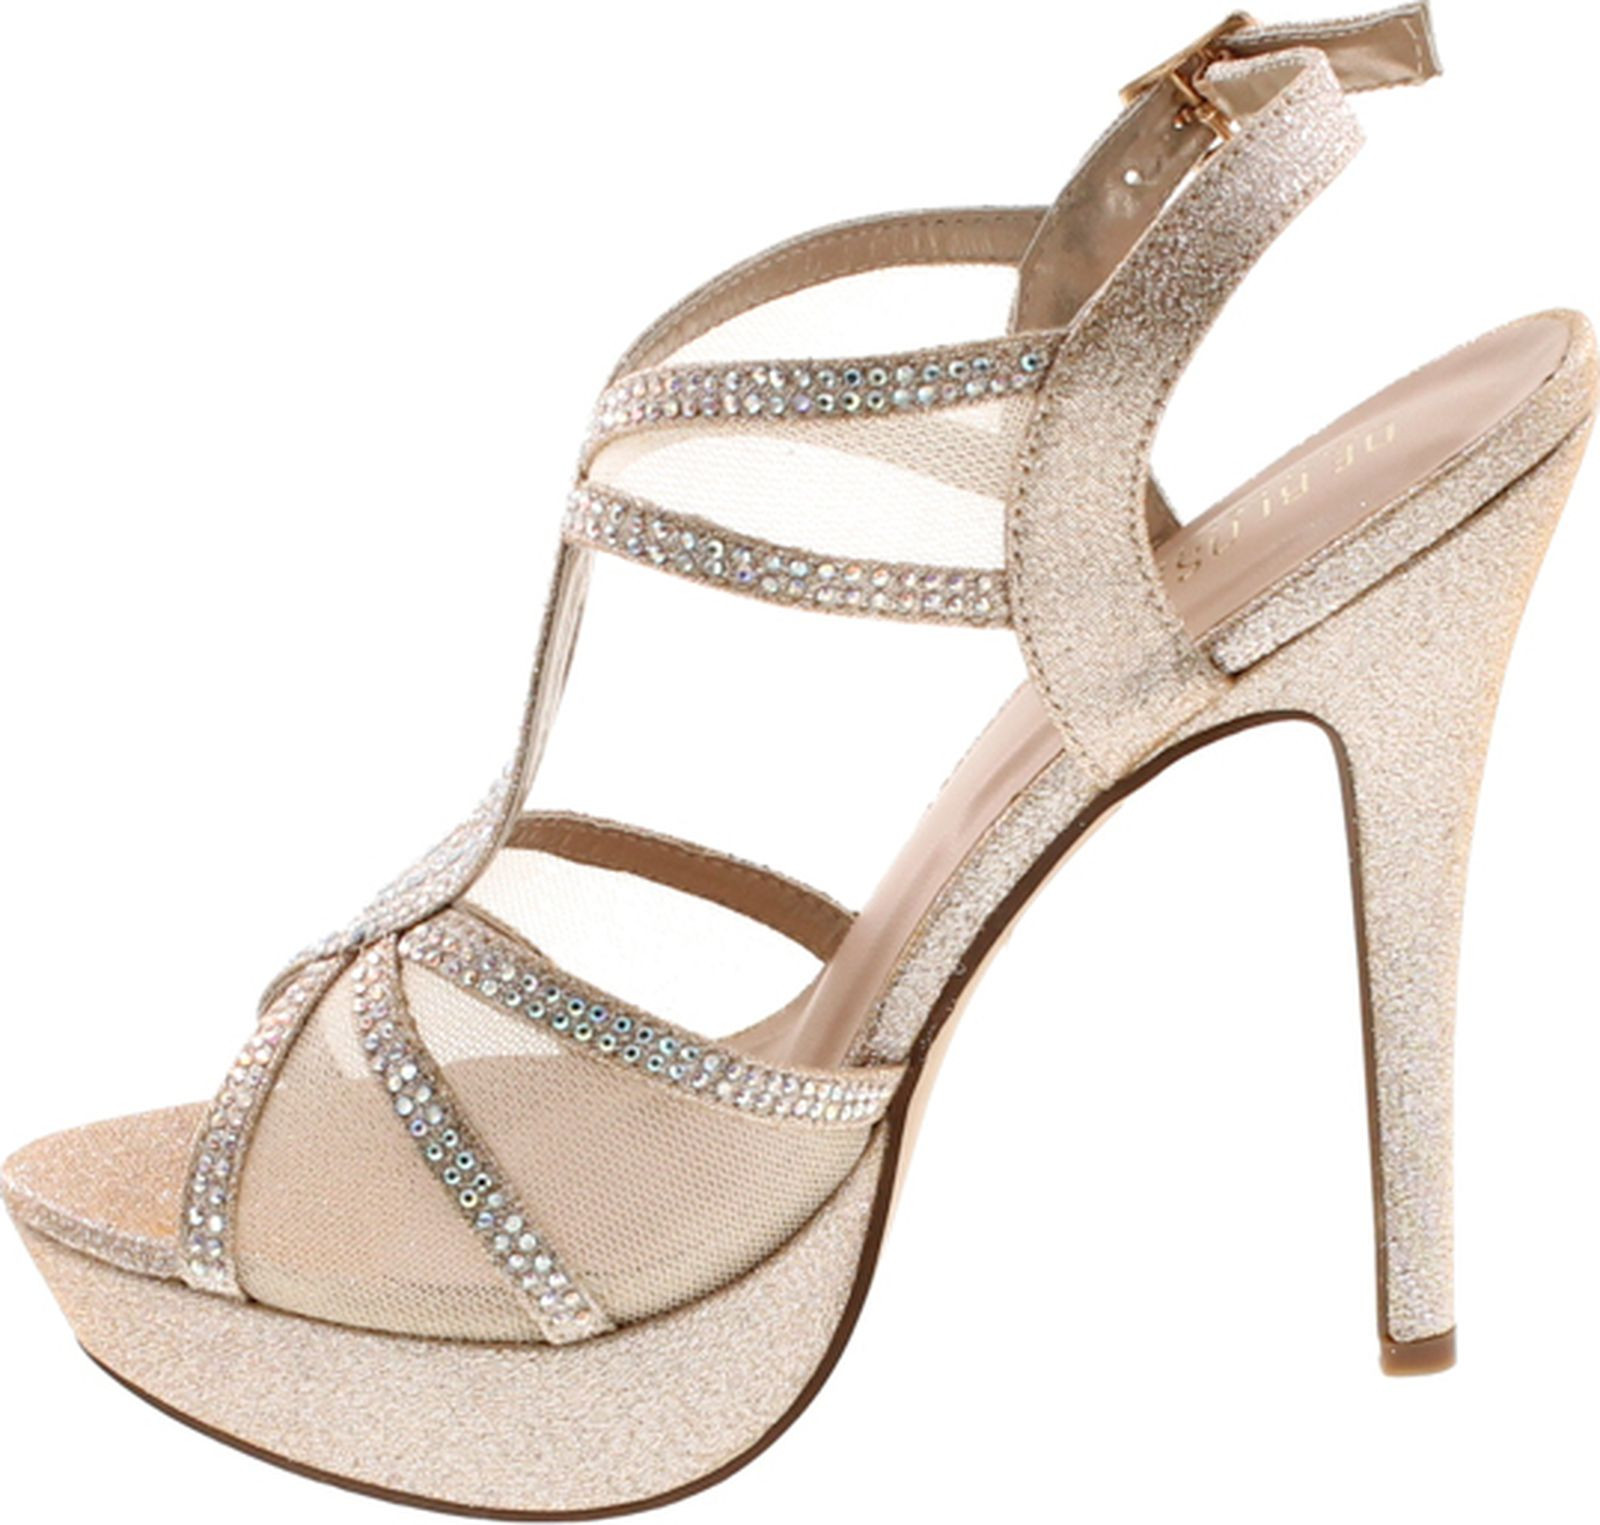 Sears Wedding Shoes
 De Blossom Vice 254 Women s High Heel Rhinestone Strappy